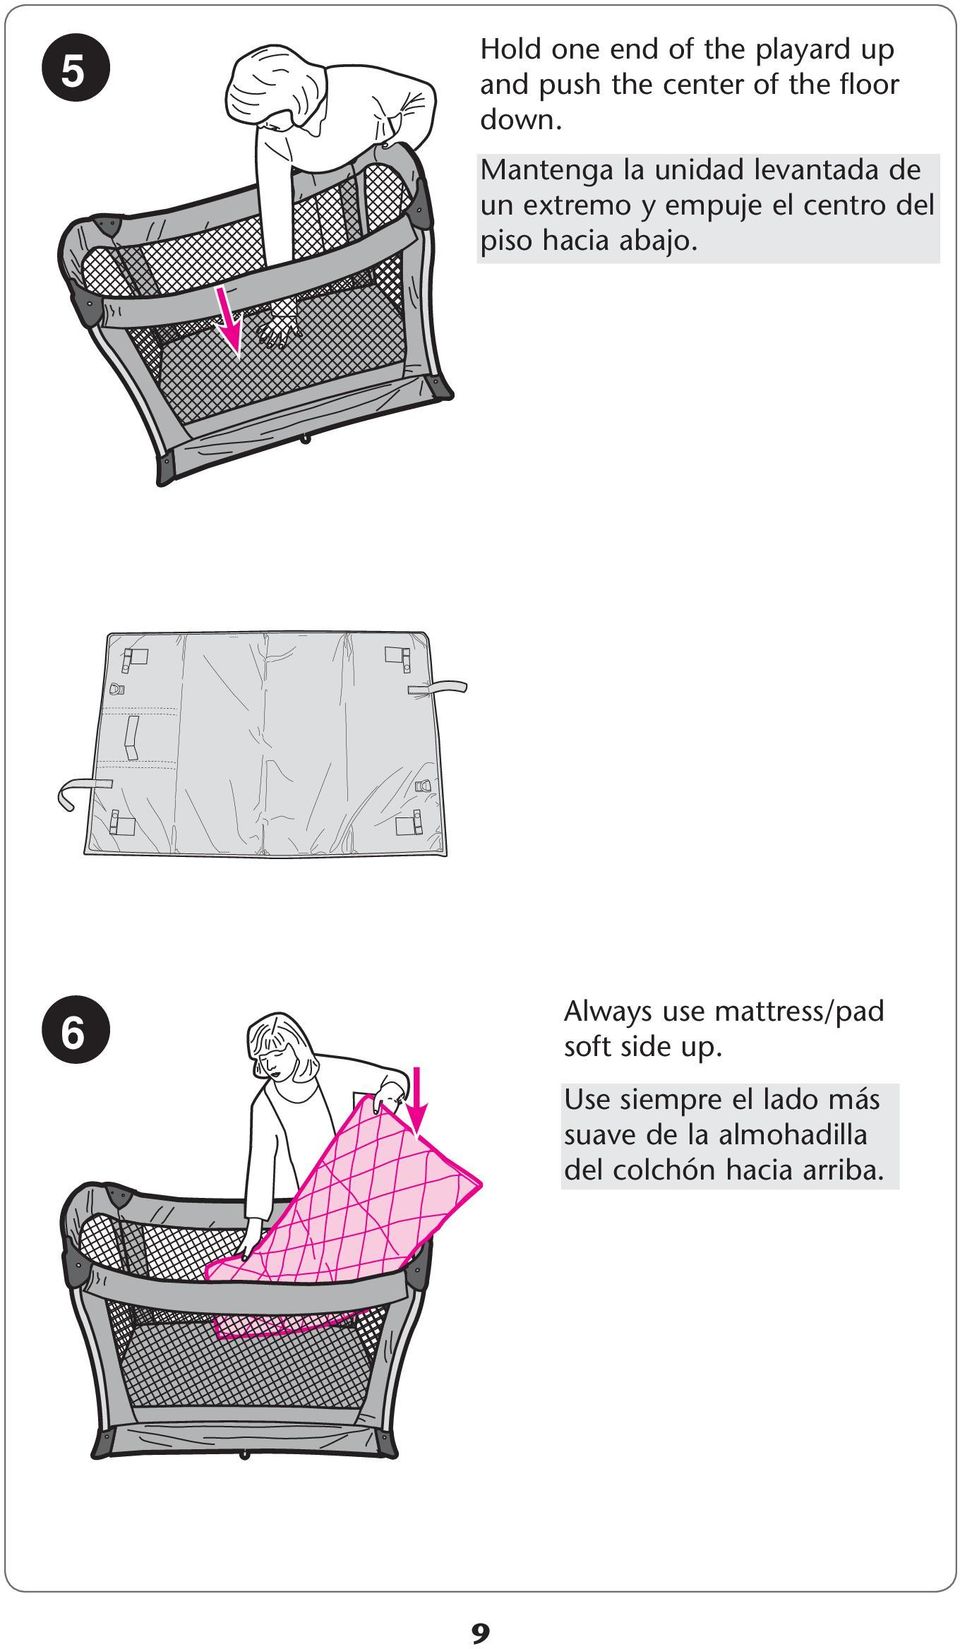 del piso hacia abajo. 6 Always use mattress/pad soft side up.